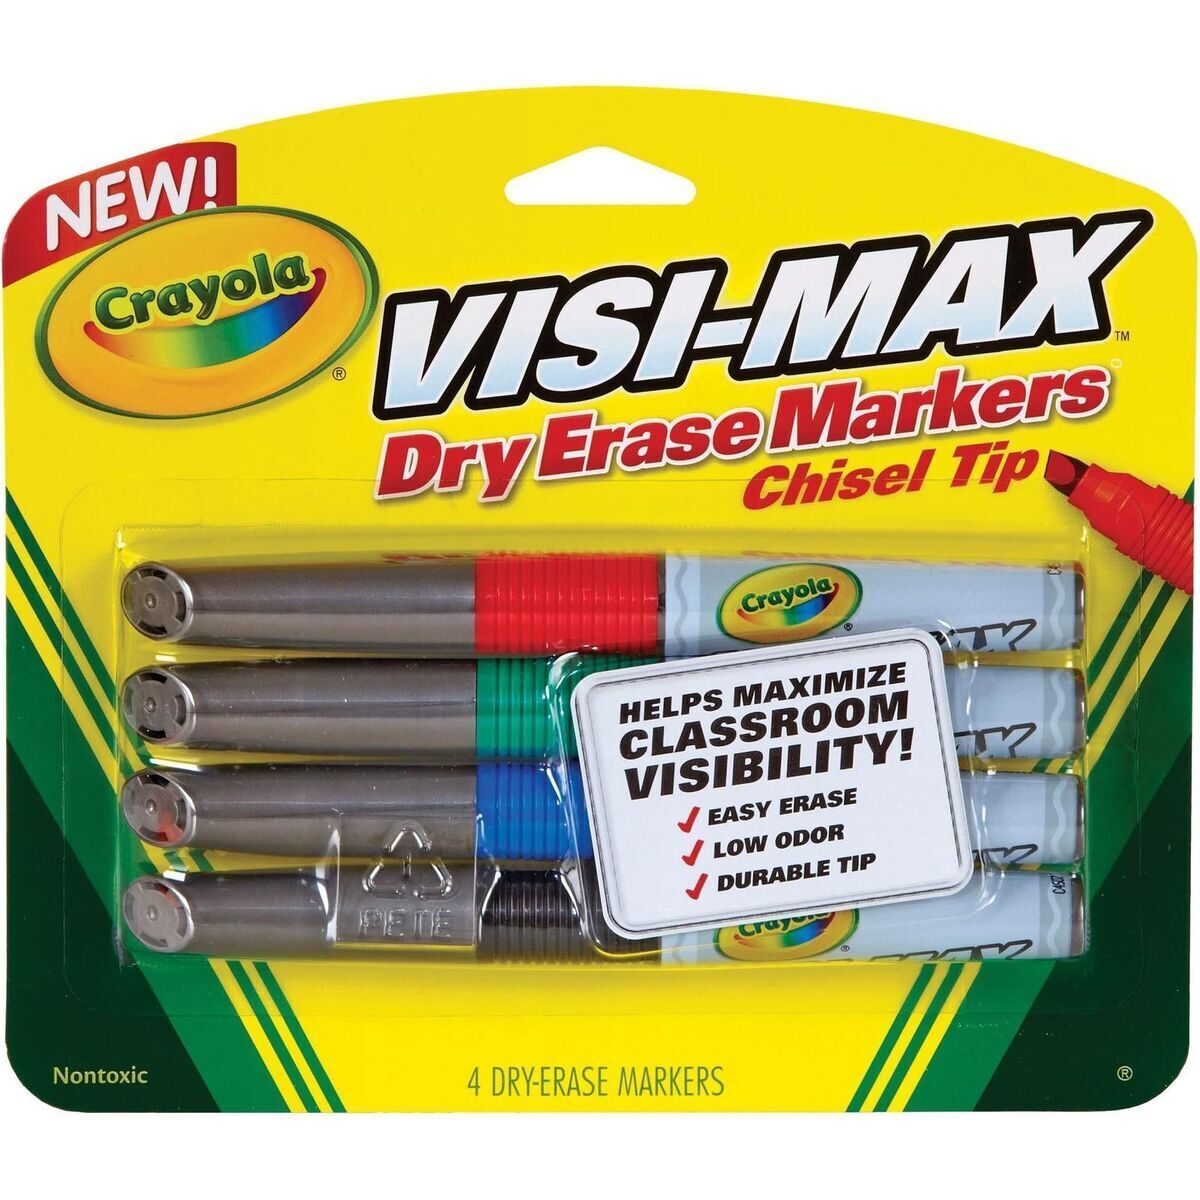 Crayola VISI-Max Dry-Erase Markers 12-Count Broad Line Black